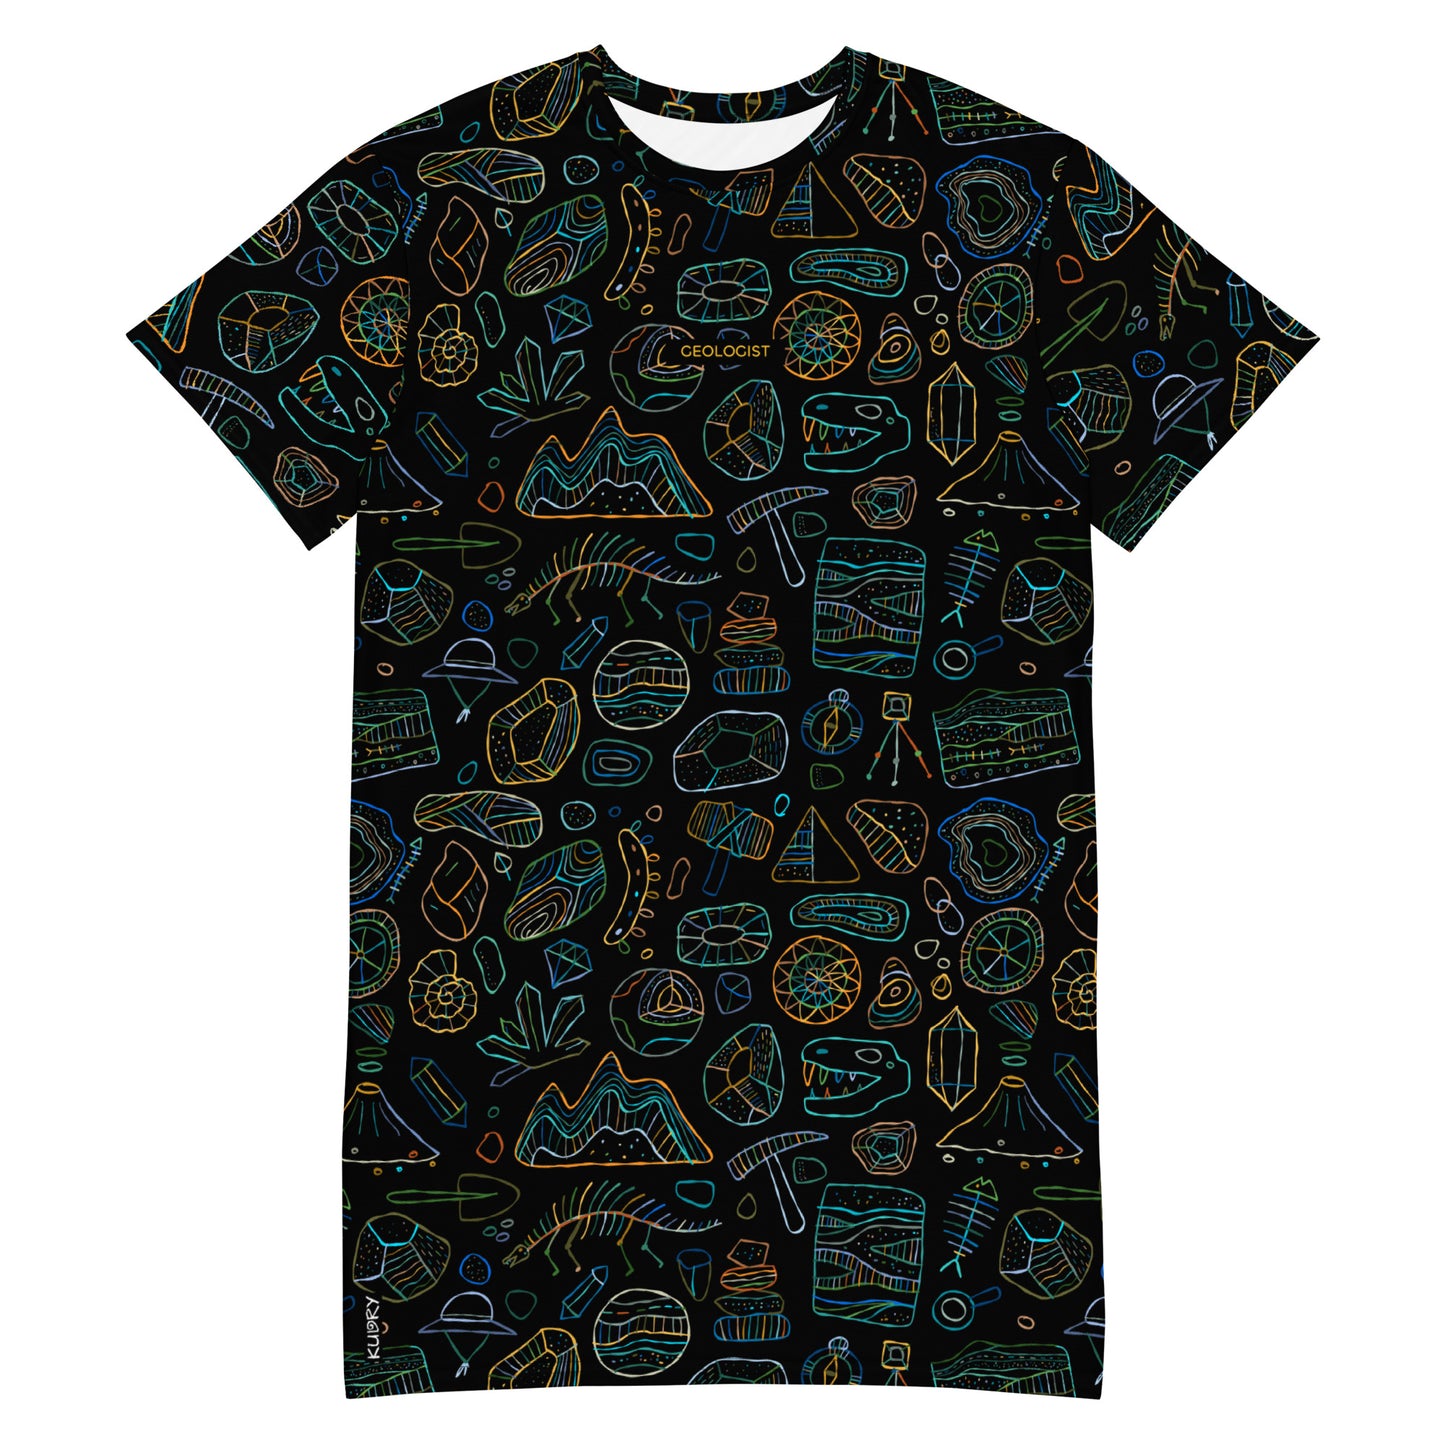 Geology-themed black personalised T-shirt dress